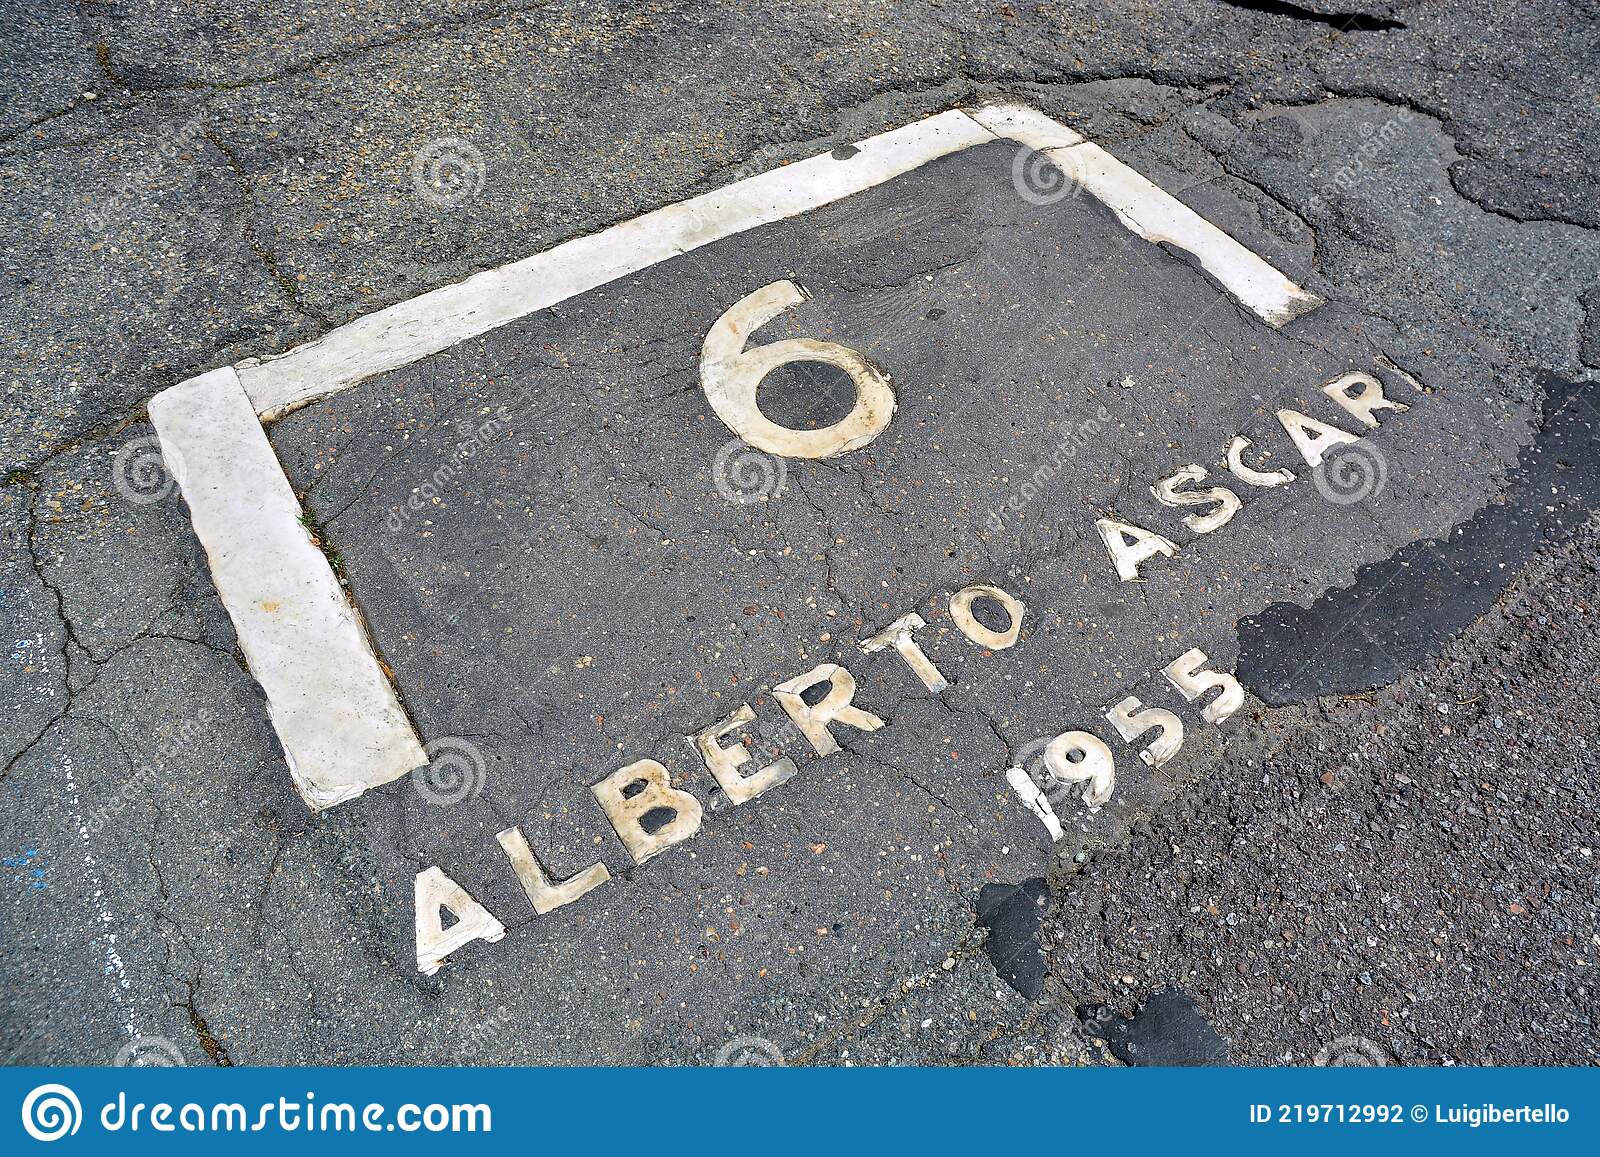 The pit lane where Alberto Ascari won the 1955 Valentino Grand Prix.